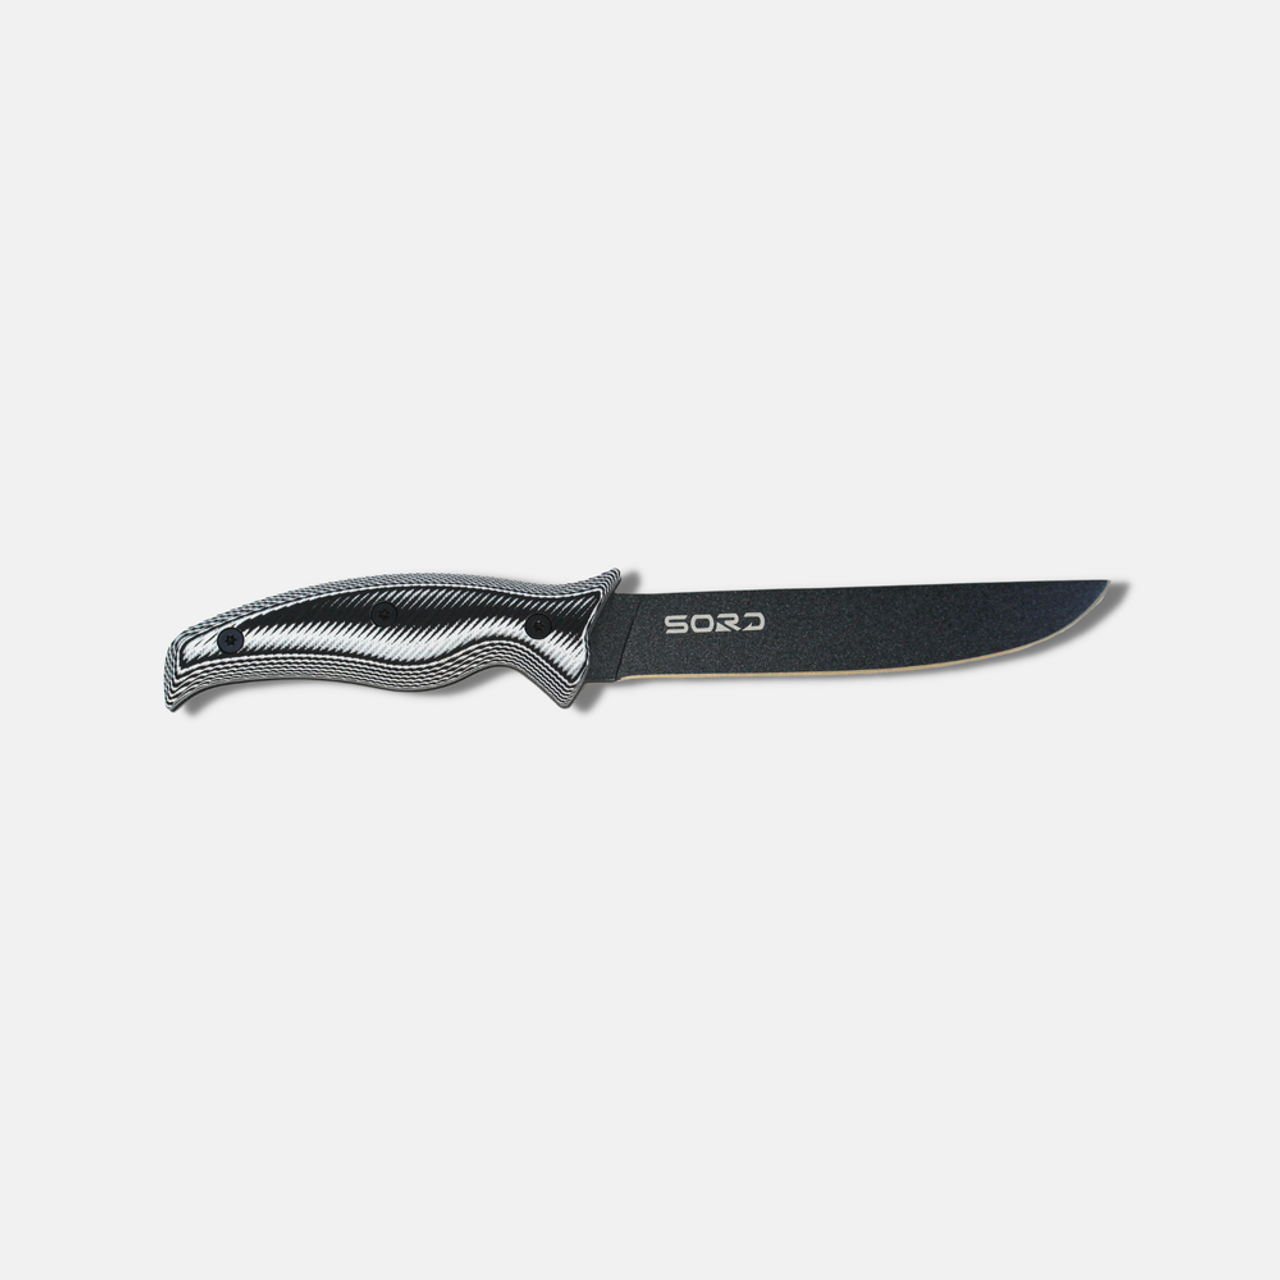 SORD Utility Knife